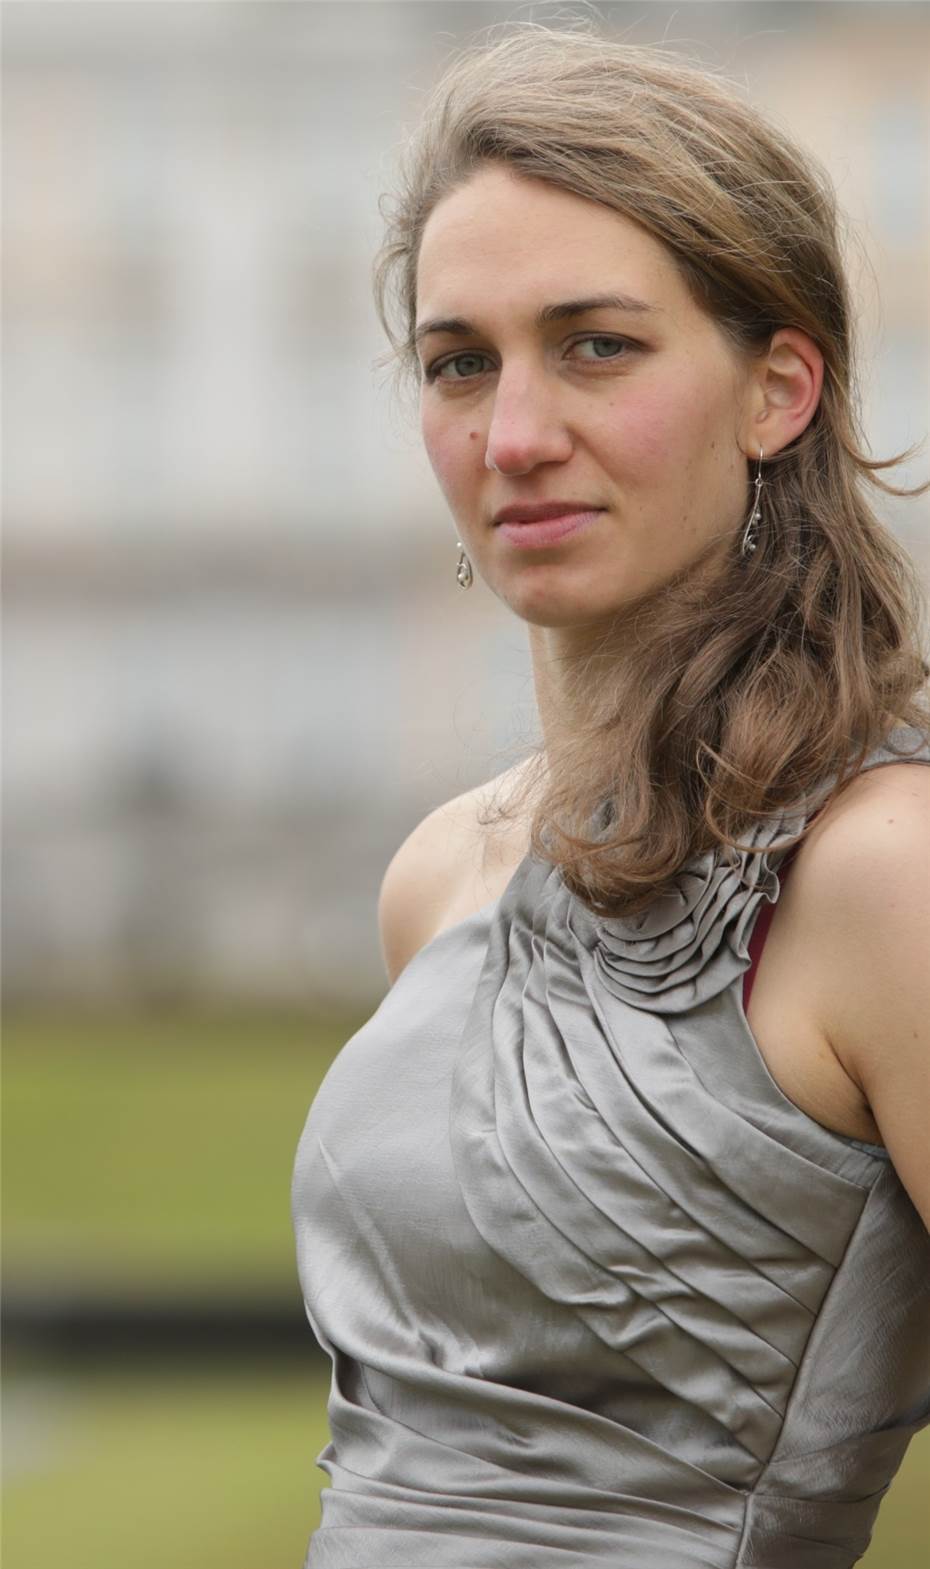 Mezzosopranistin Lydia Krüger sammelt Spenden für Flutopfer